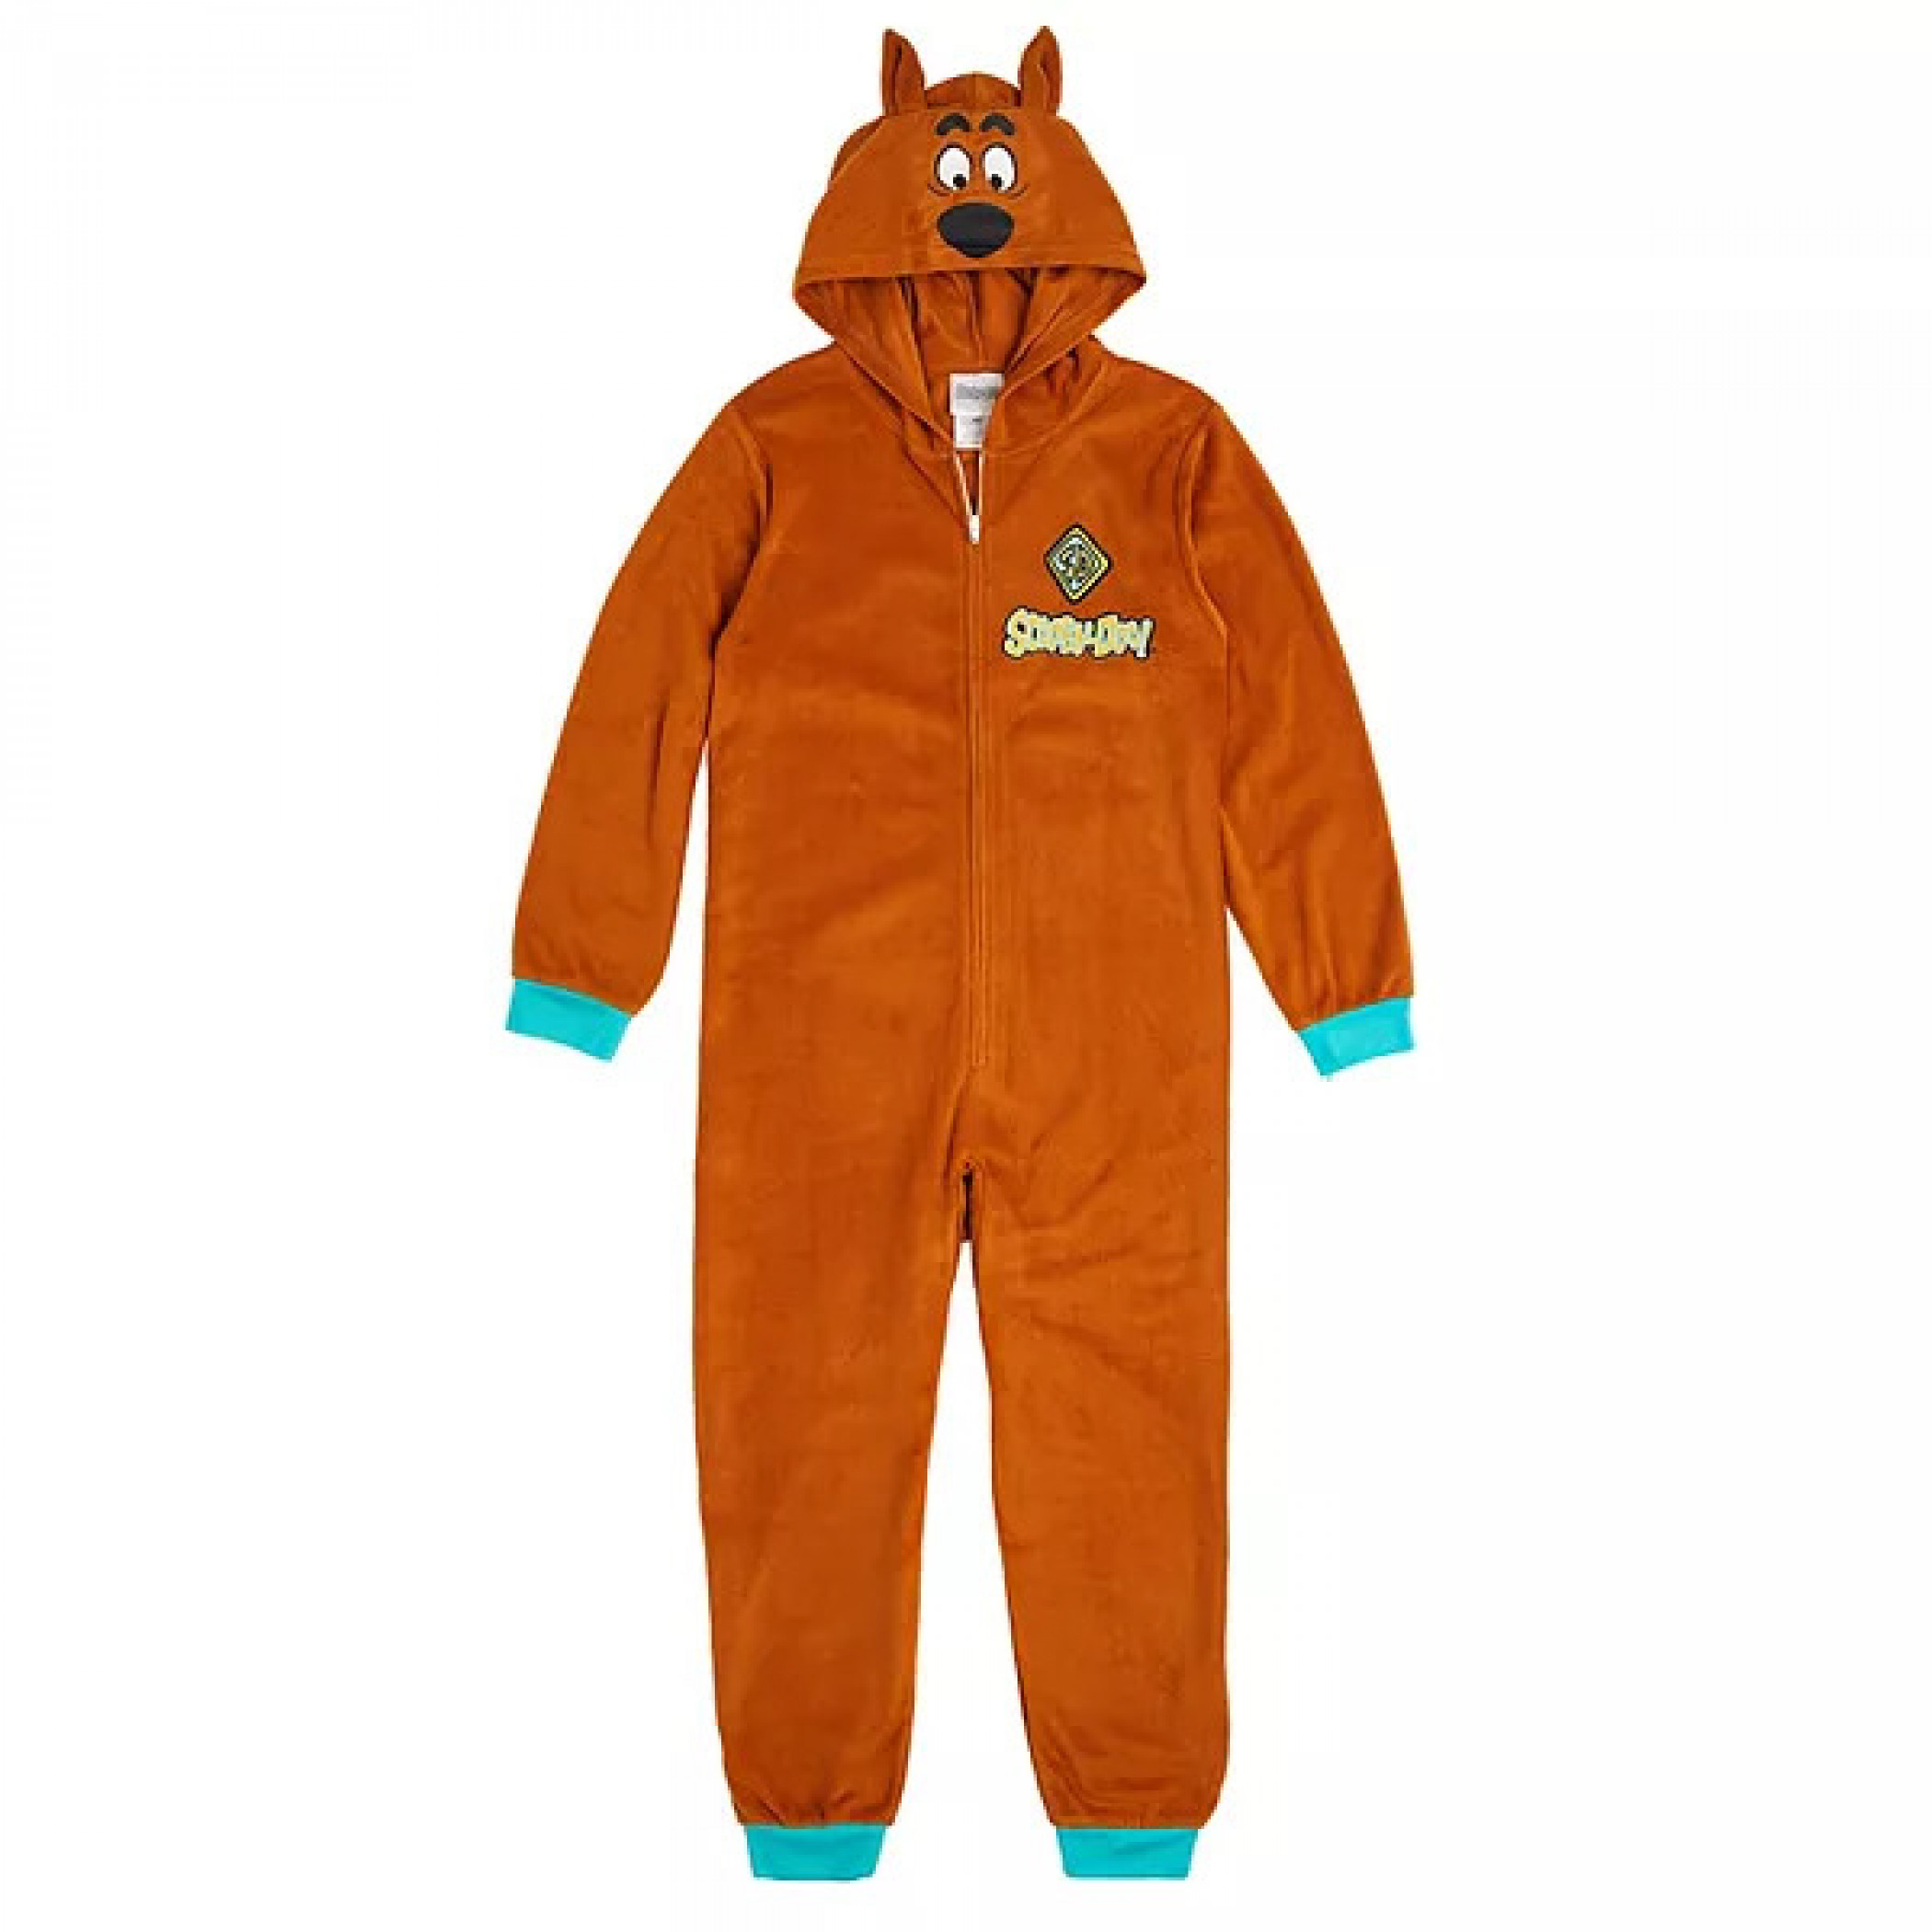 Scooby-Doo Costume Kids Union Suit